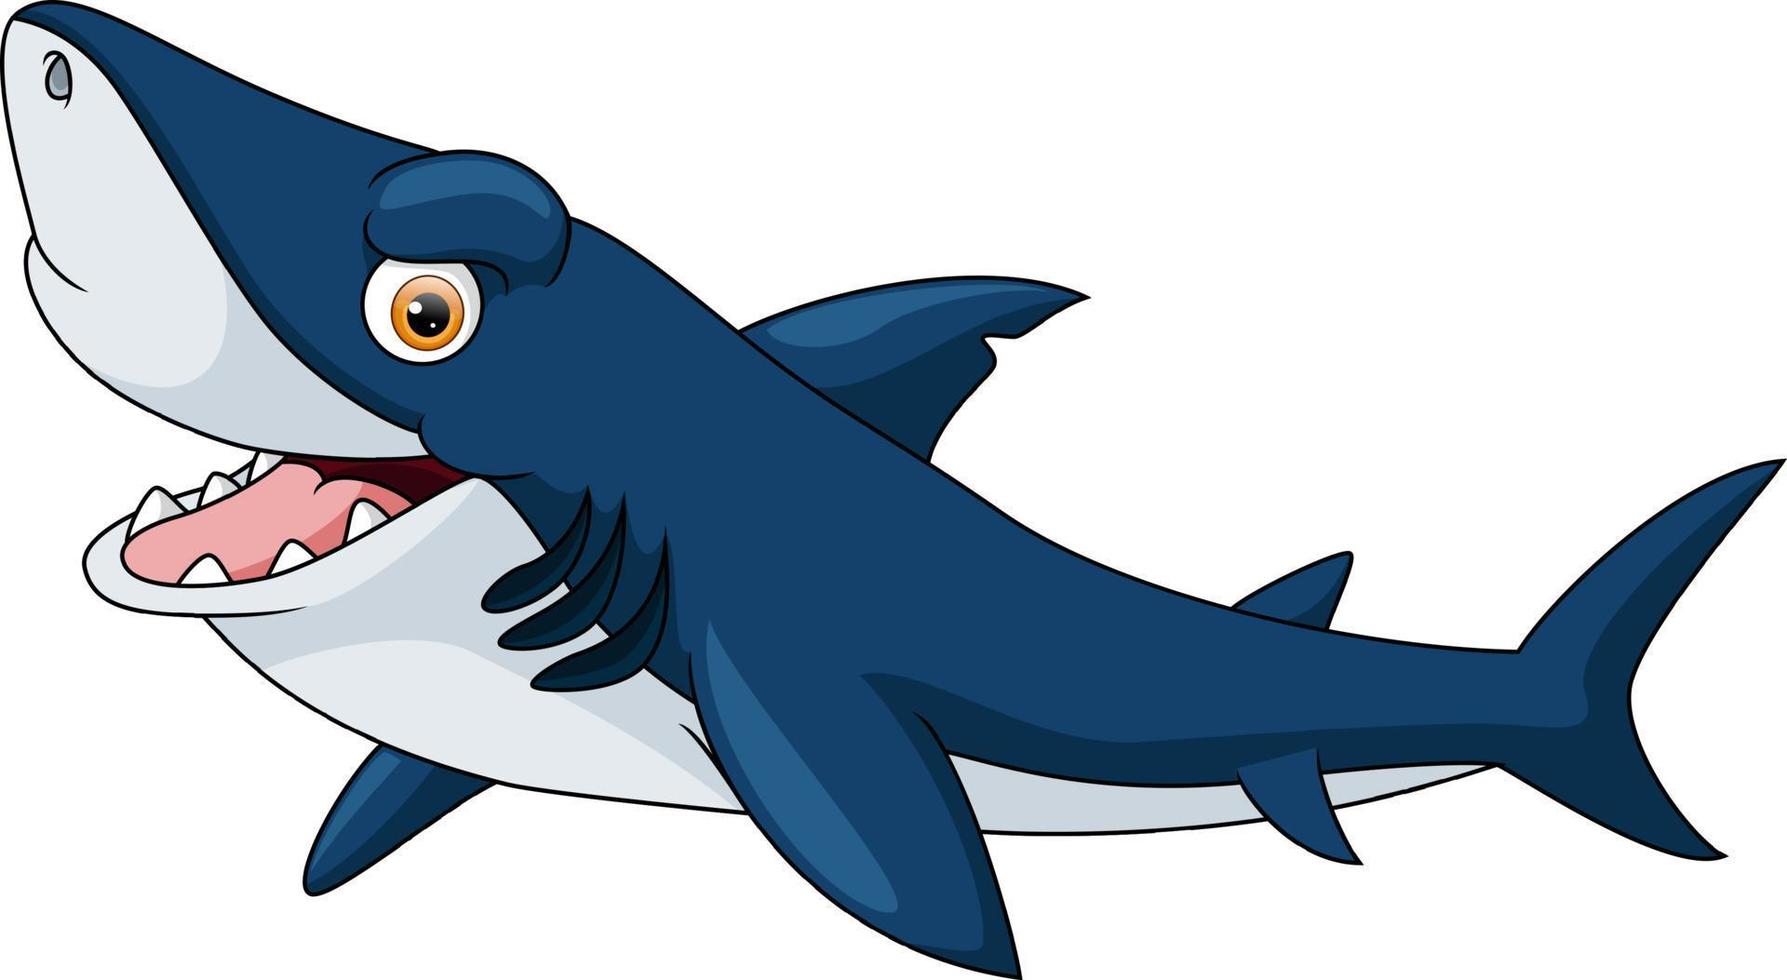 Cute shark cartoon on white background vector